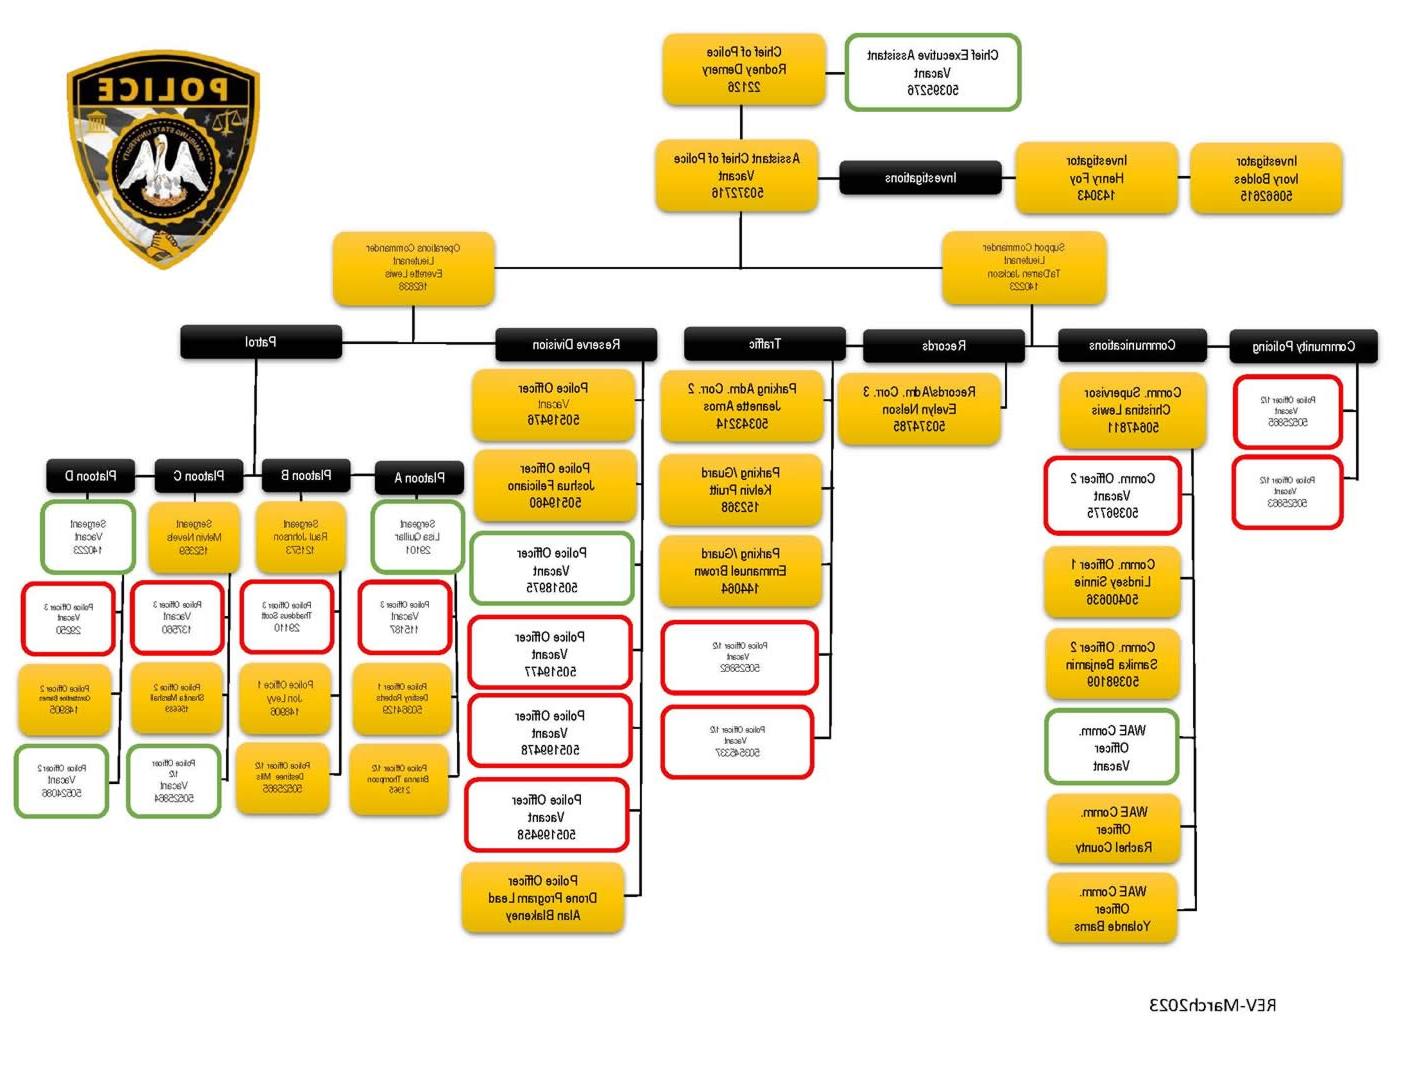 GSU Police Department Hierarchy/Organizational Chart